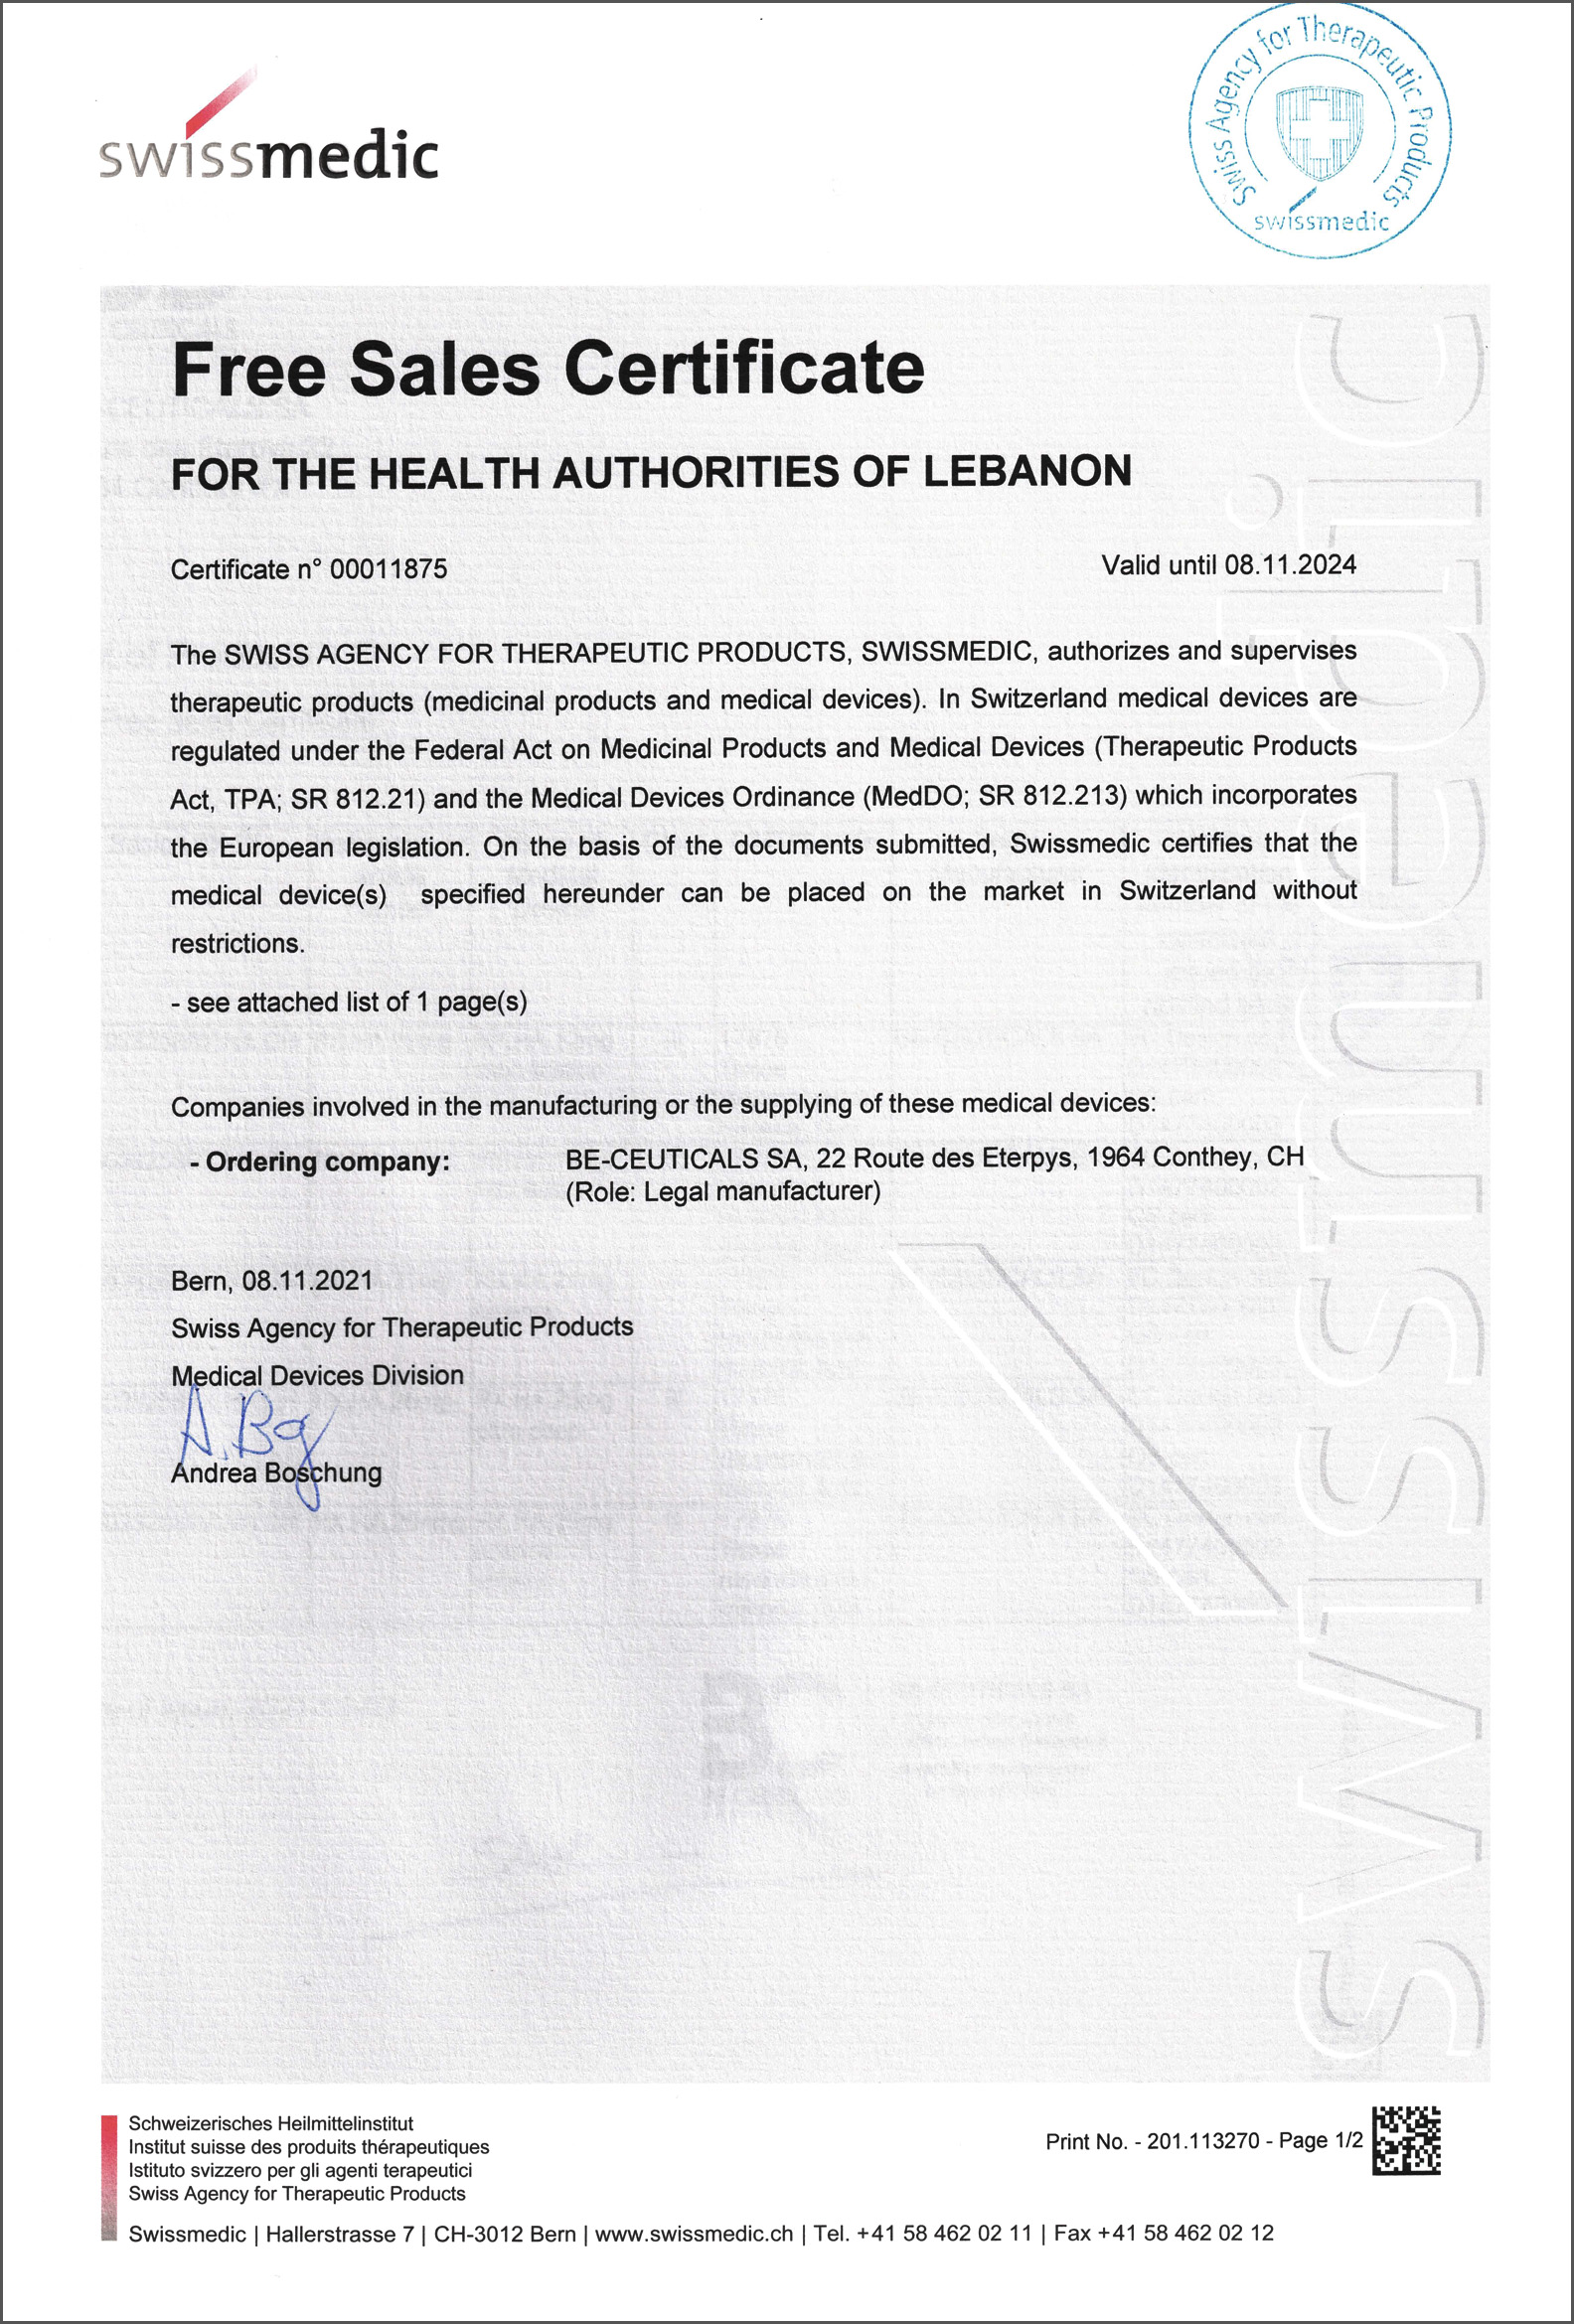 Swissmedic - Free Sales Certificate - Lebanon